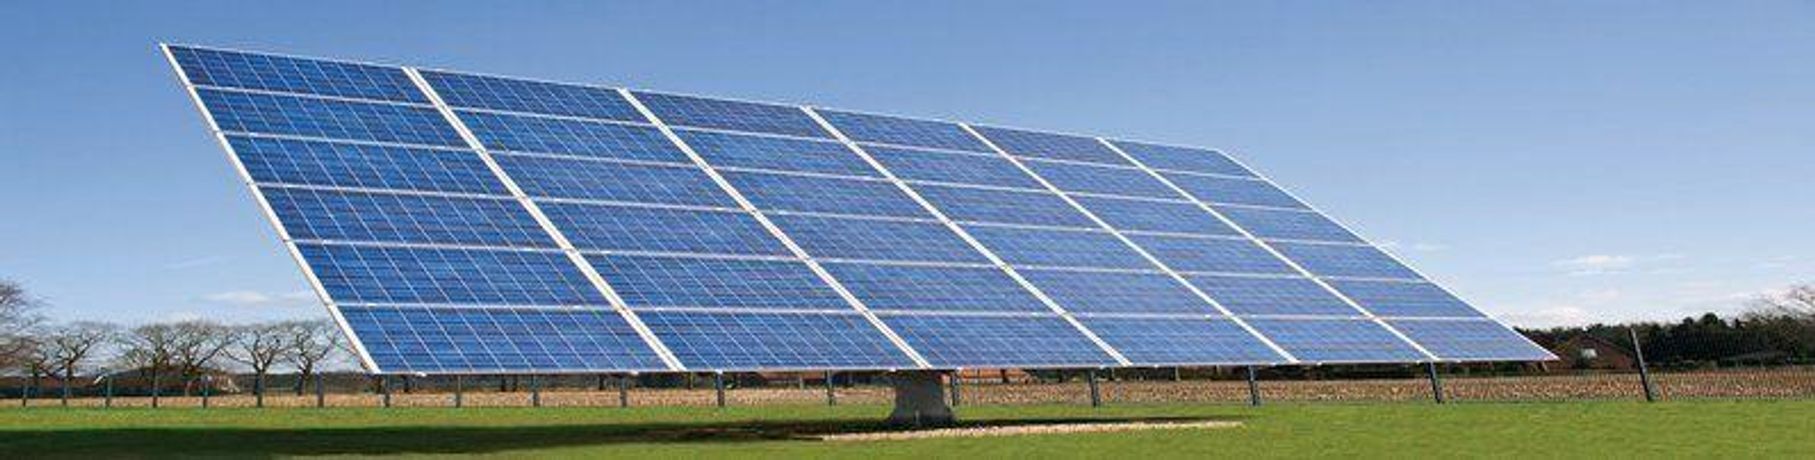 Solar Tracking System - Energy - Solar Energy